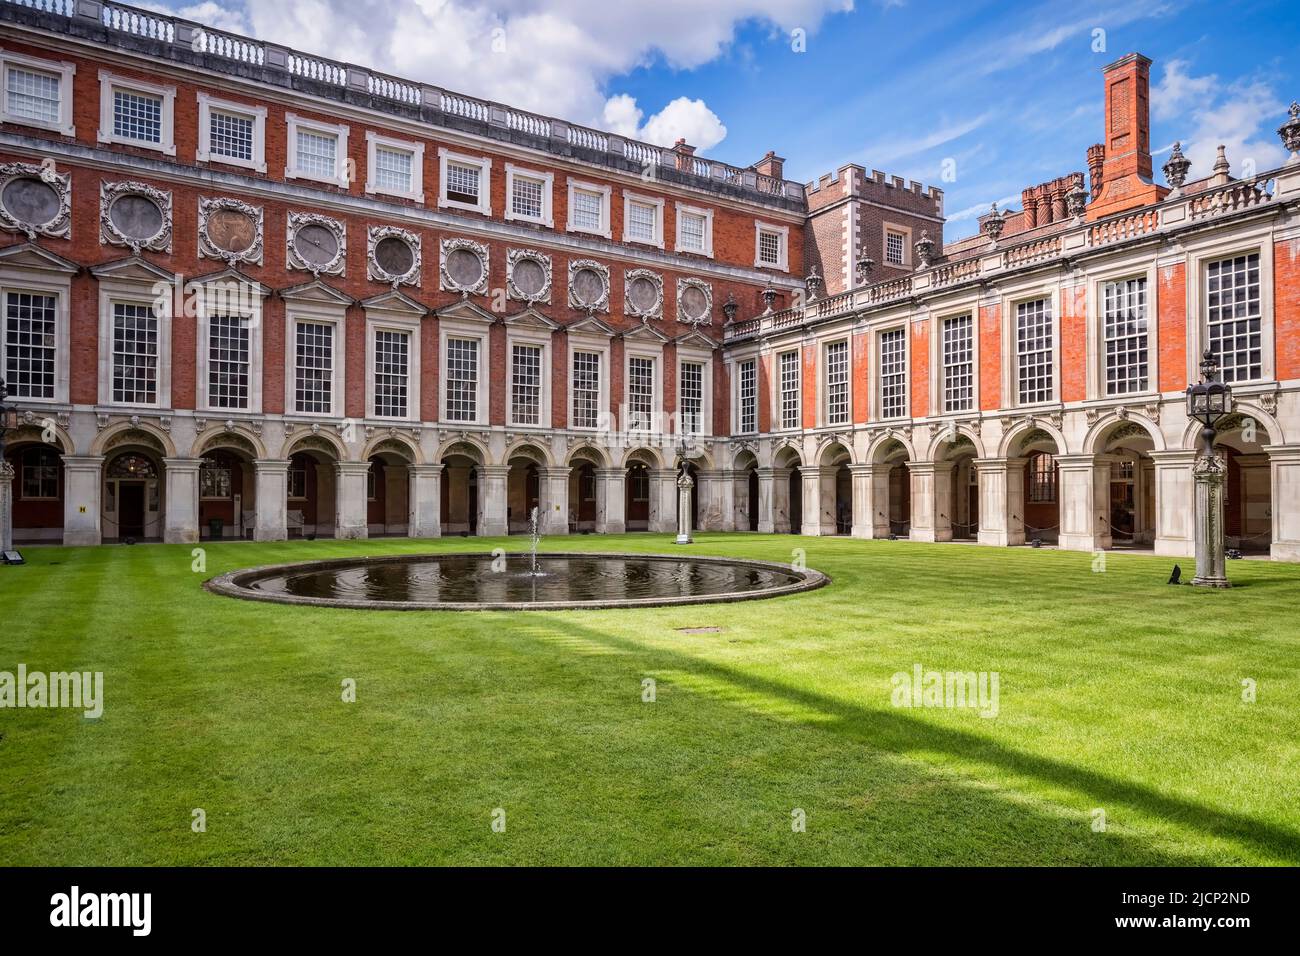 9 de junio de 2019: Richmond upon Thames, Londres, Reino Unido - The Fountain Court en Hampton Court Palace, la antigua residencia real en el oeste de Londres. Foto de stock